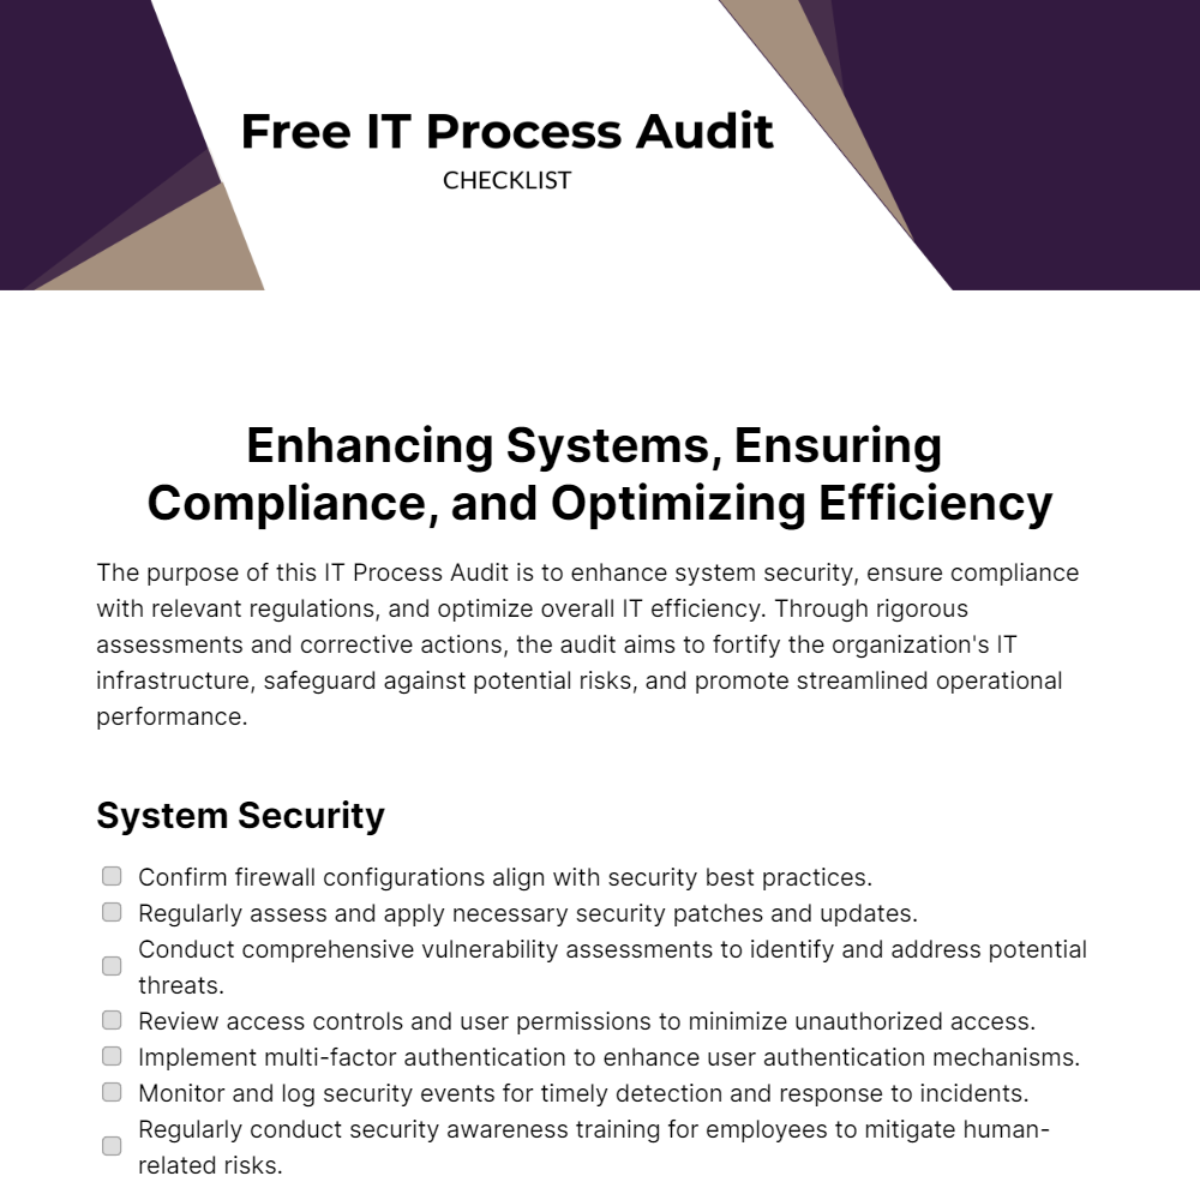 Free IT Process Audit Checklist Template